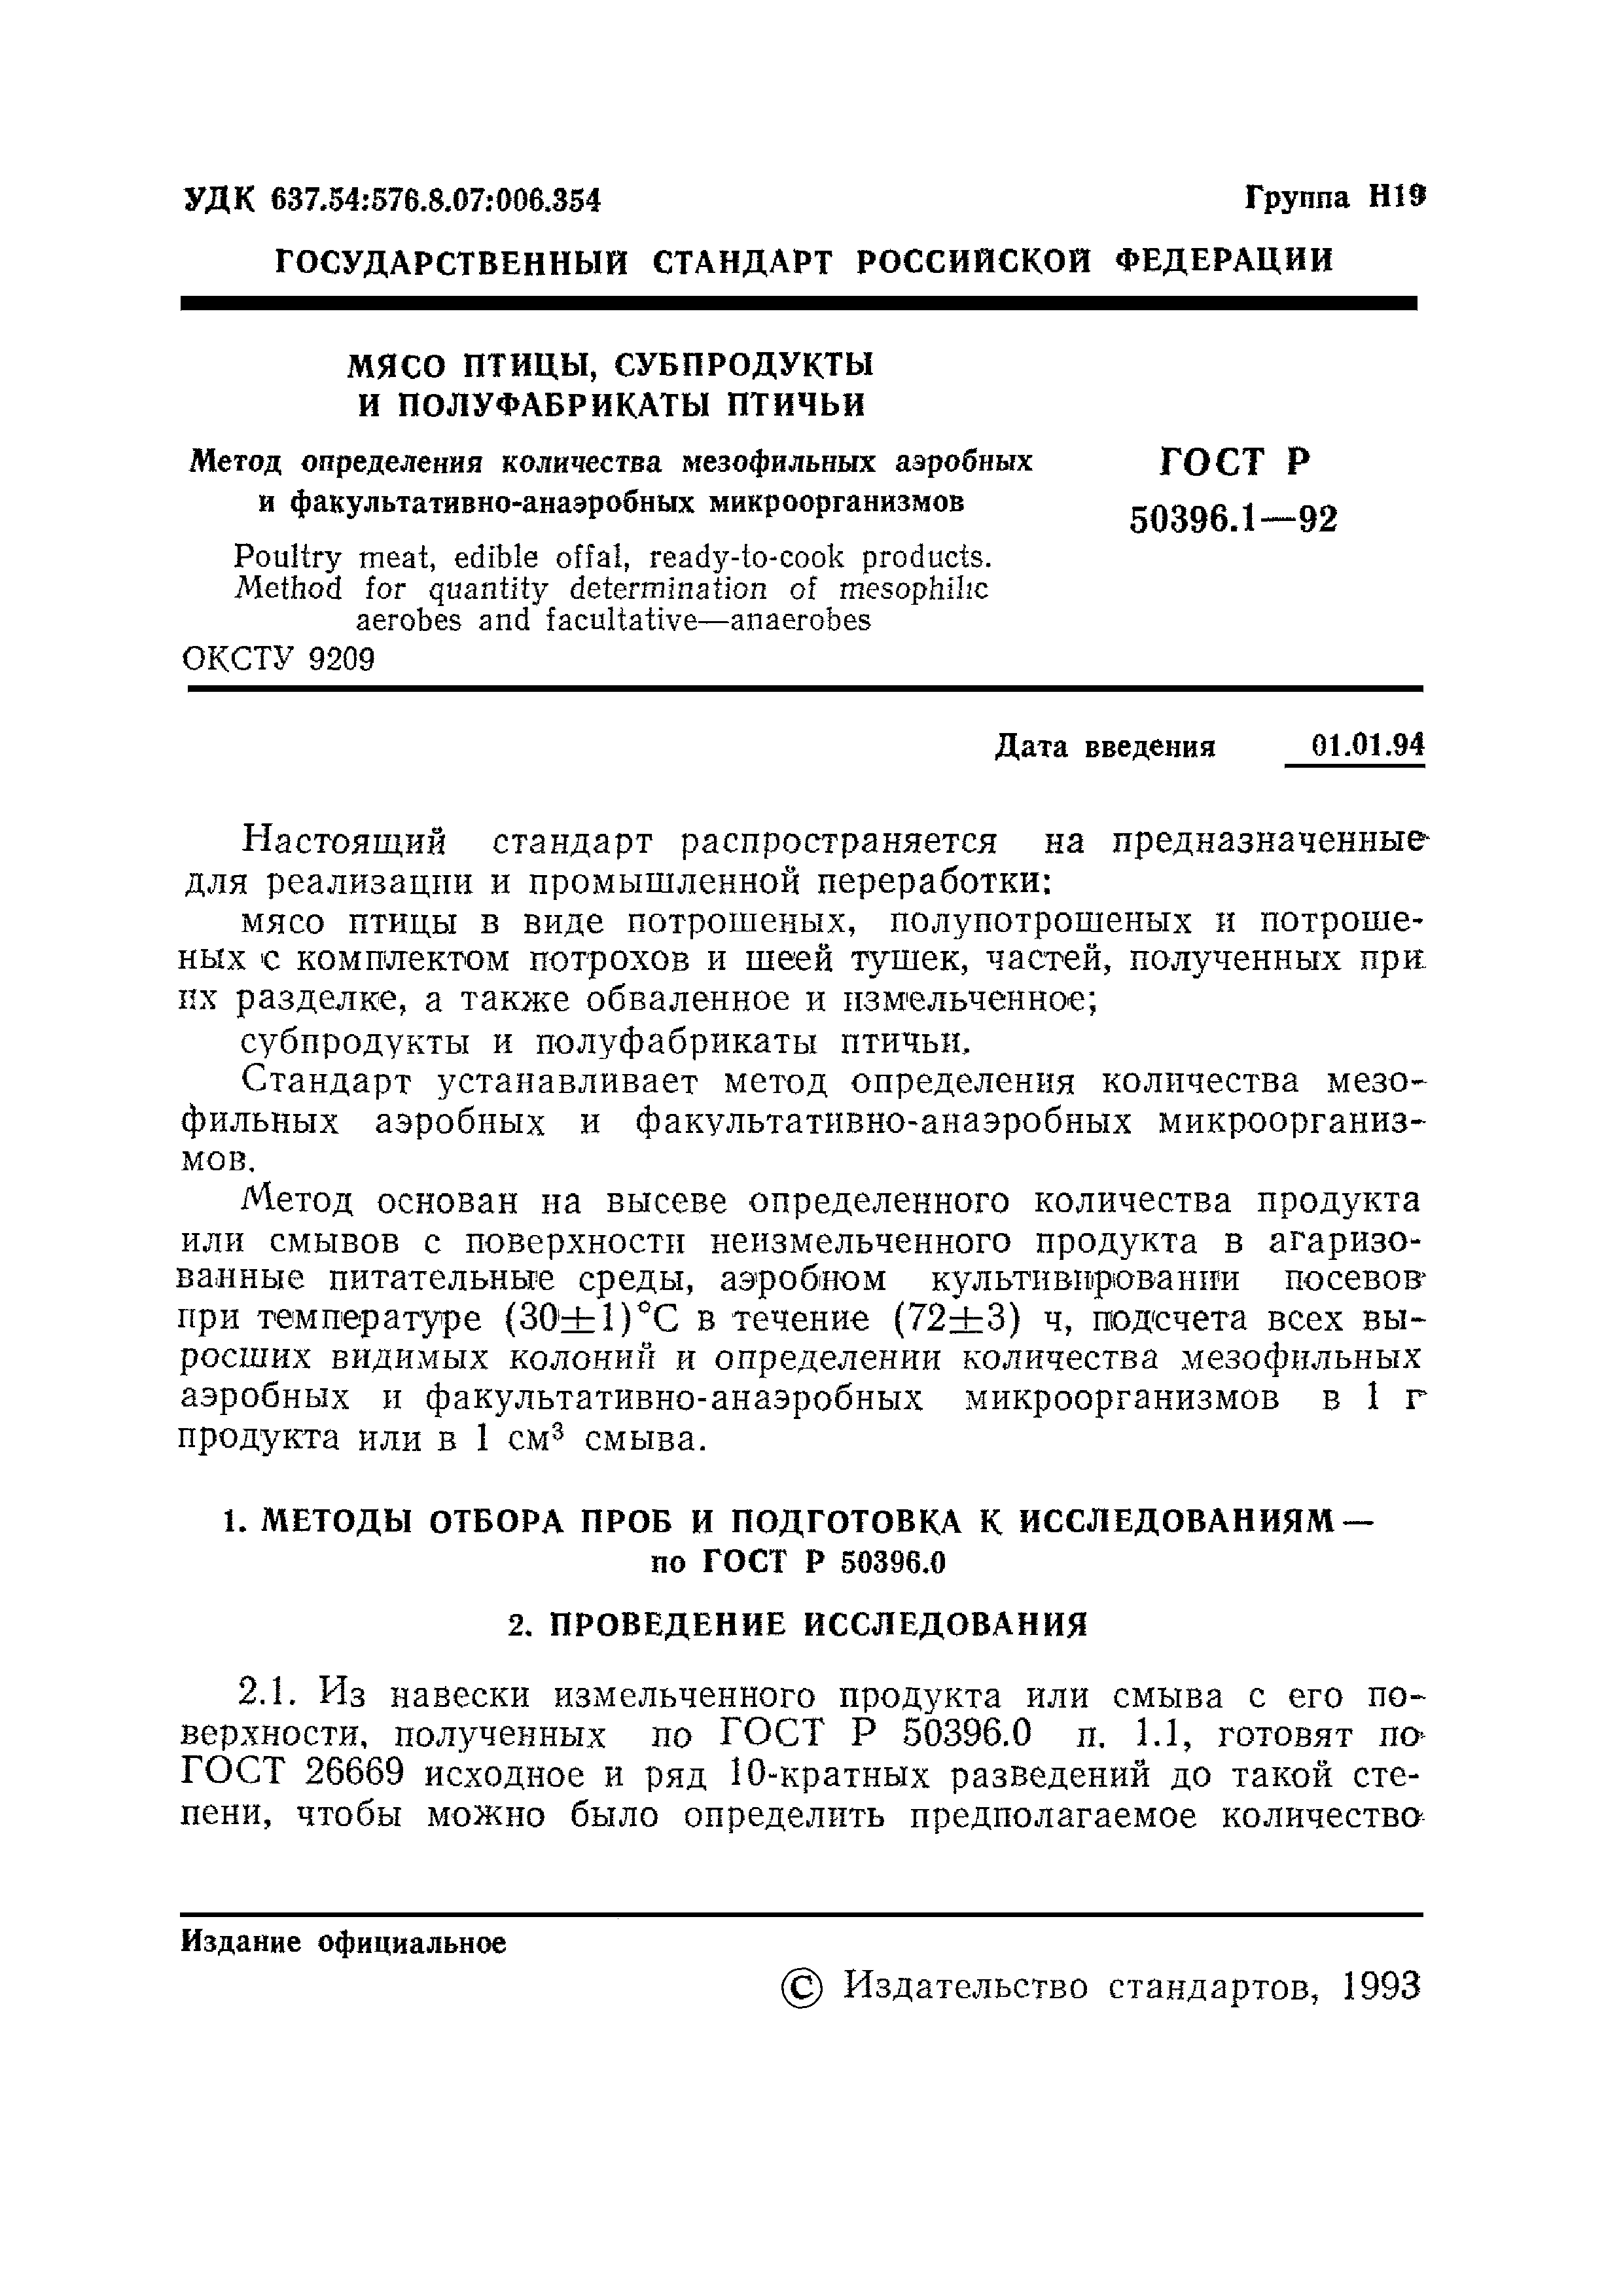 ГОСТ Р 50396.1-92